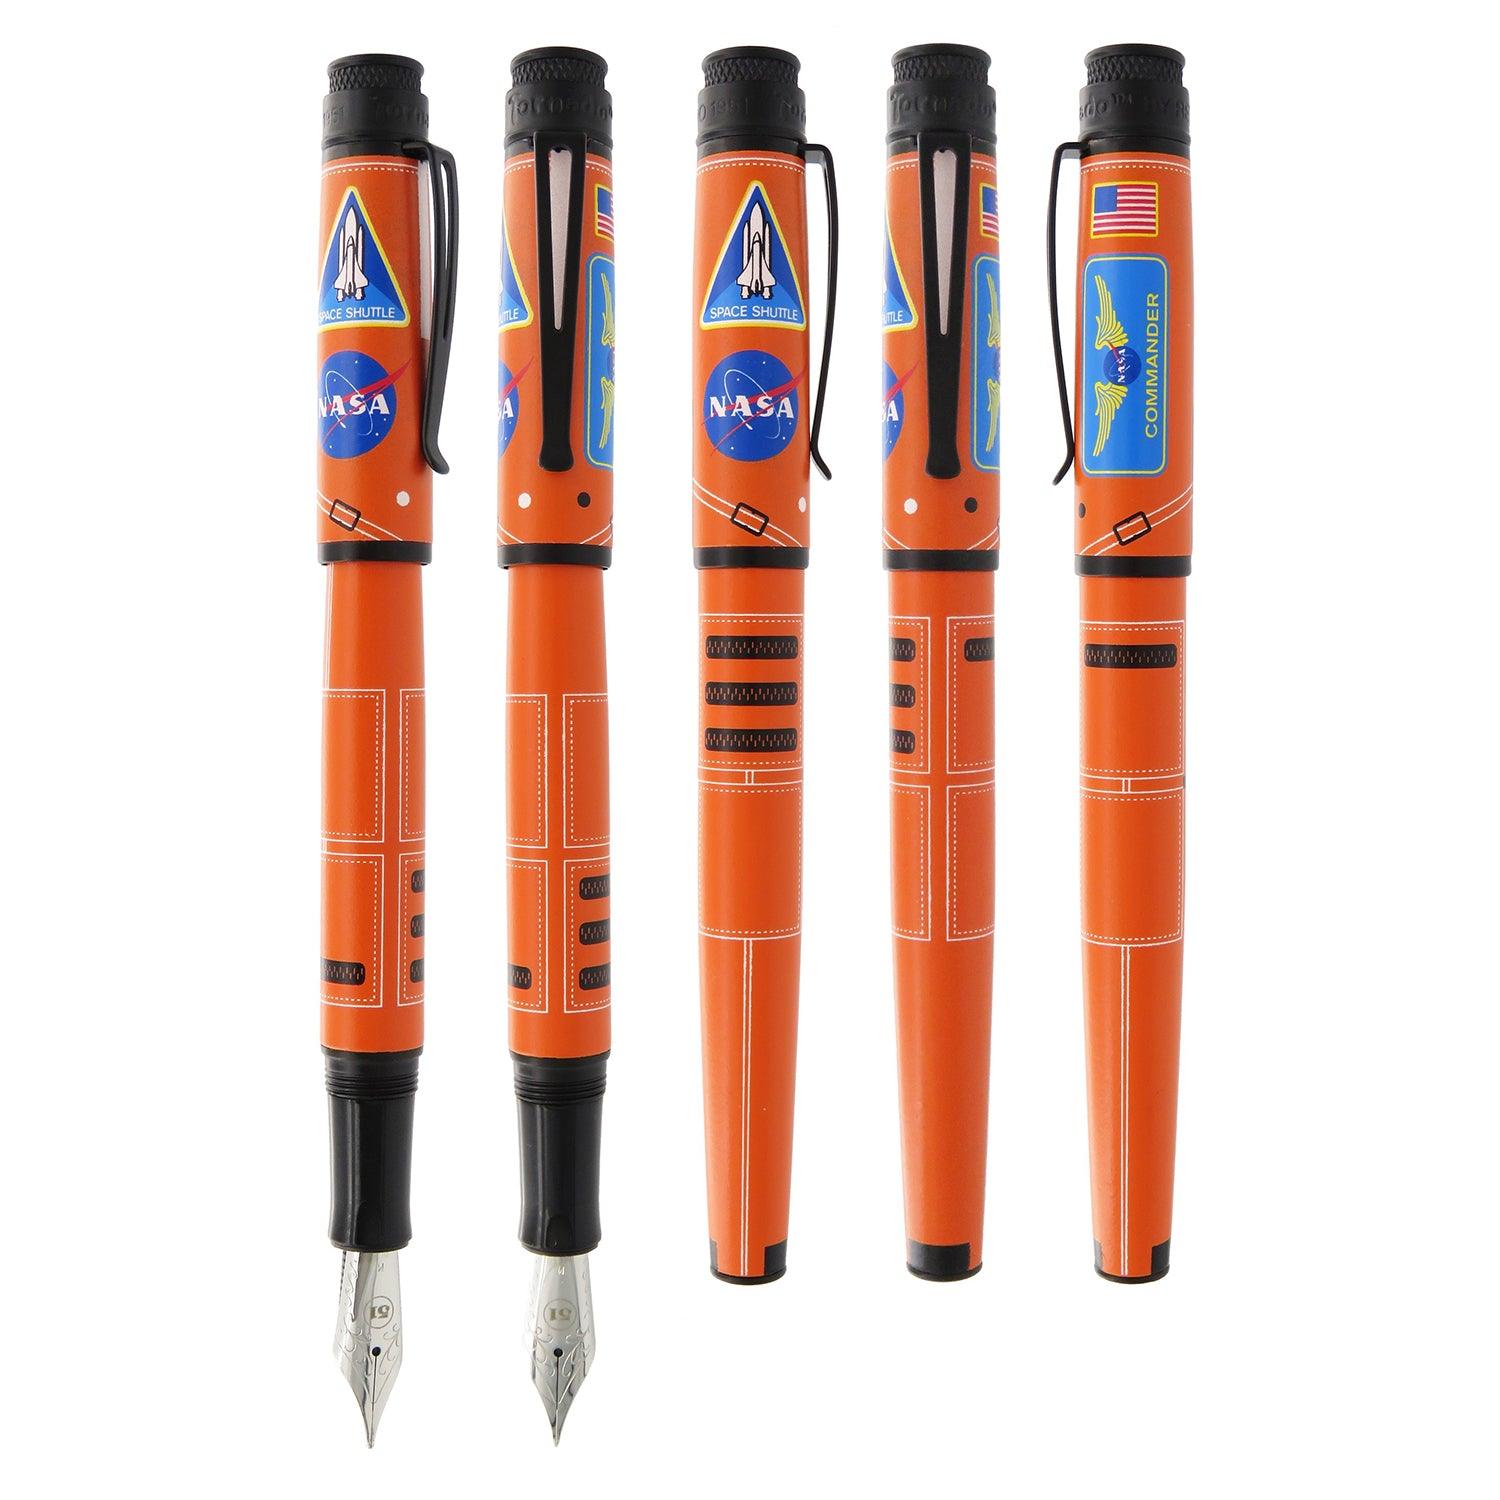 Tornado Escape Fountain Pen - Pens and Pencils - Science Museum Shop